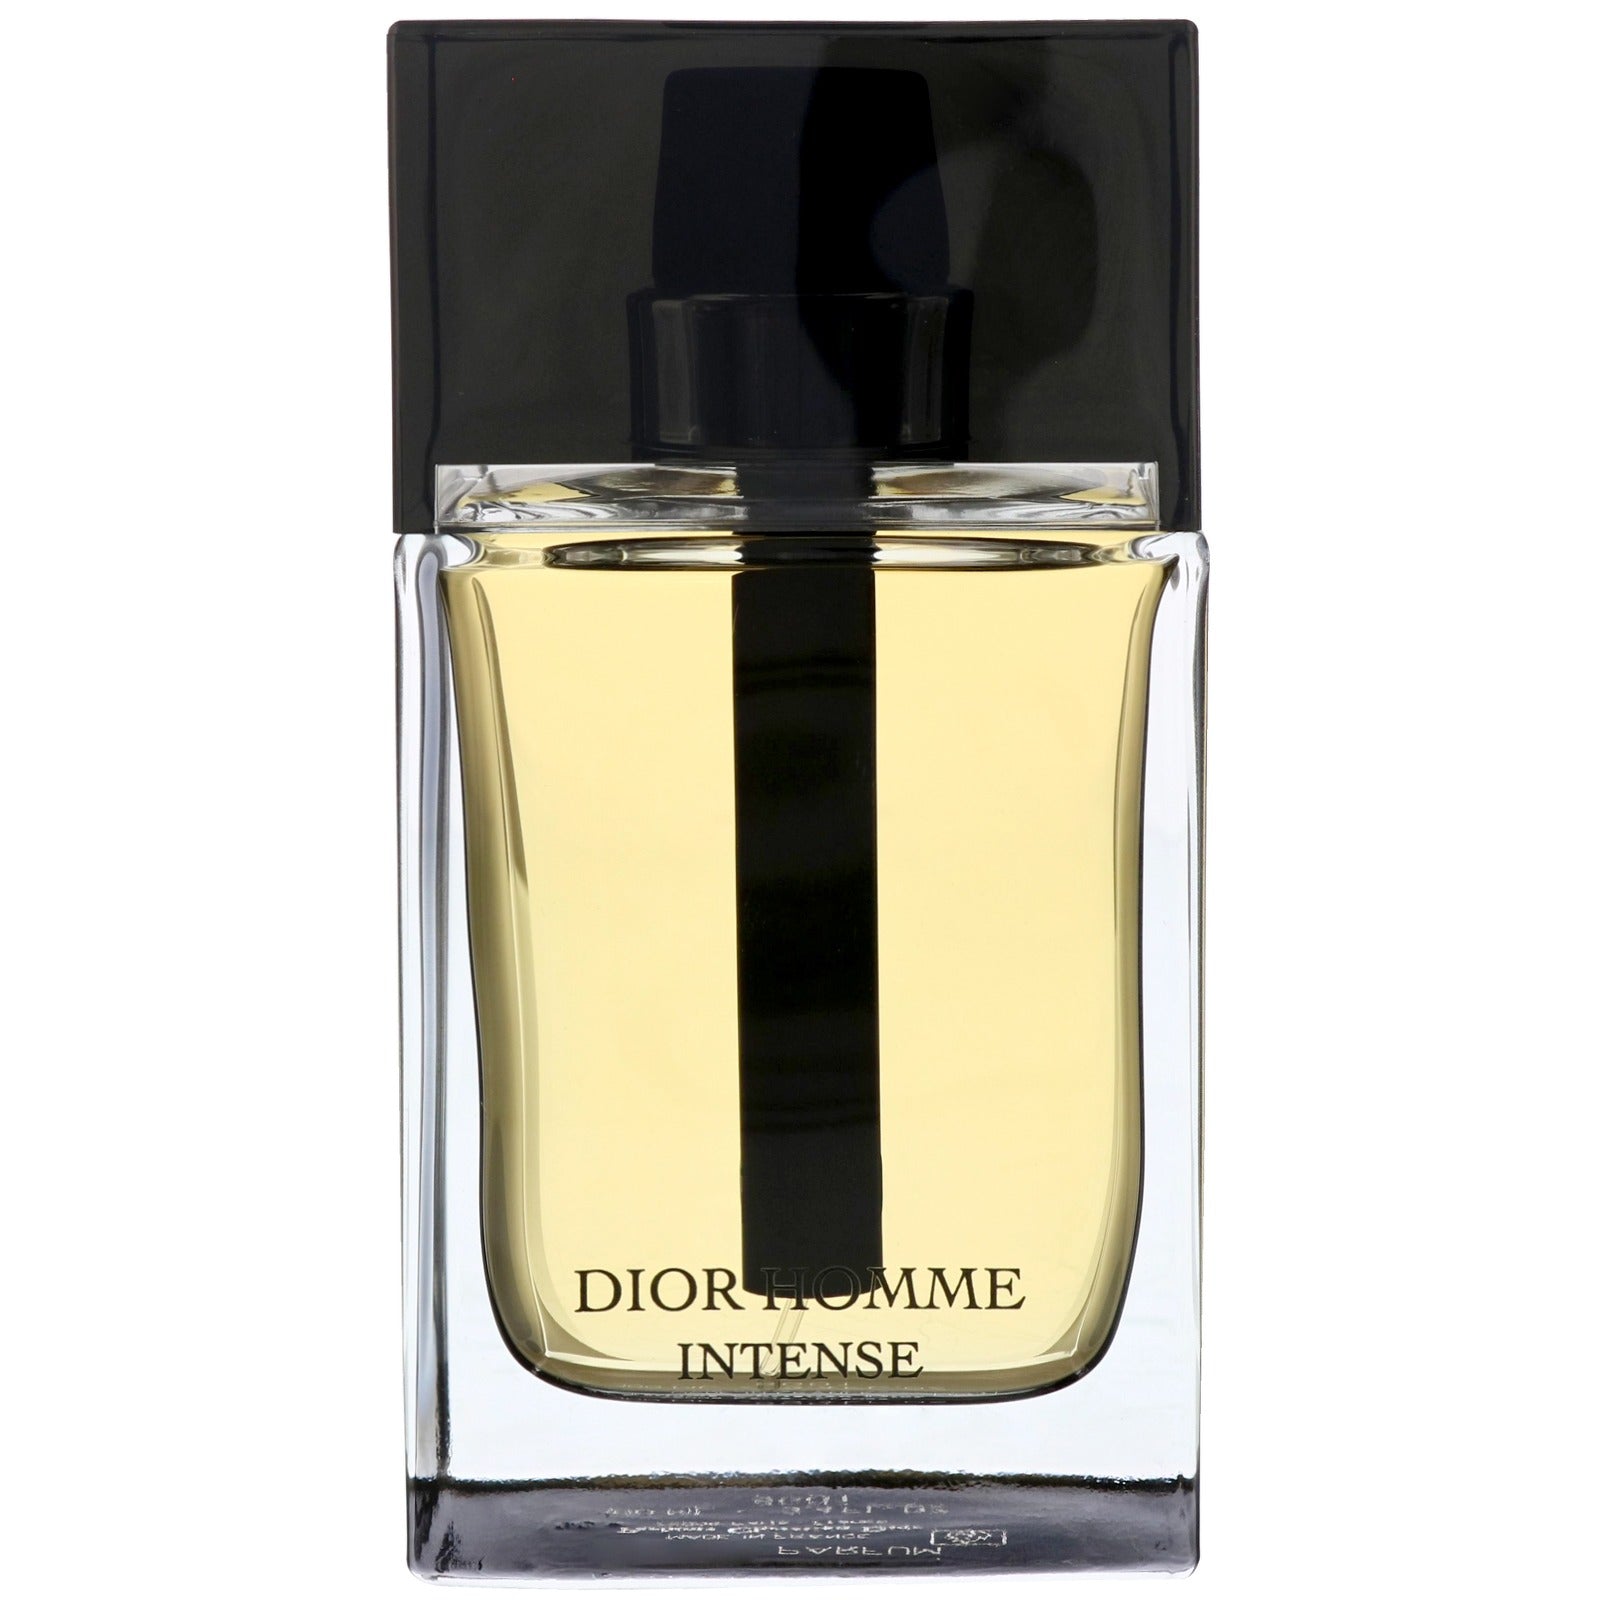 Dior Homme Intense Eau De Parfum Spray 10ml - LookincredibleDior3348900838185